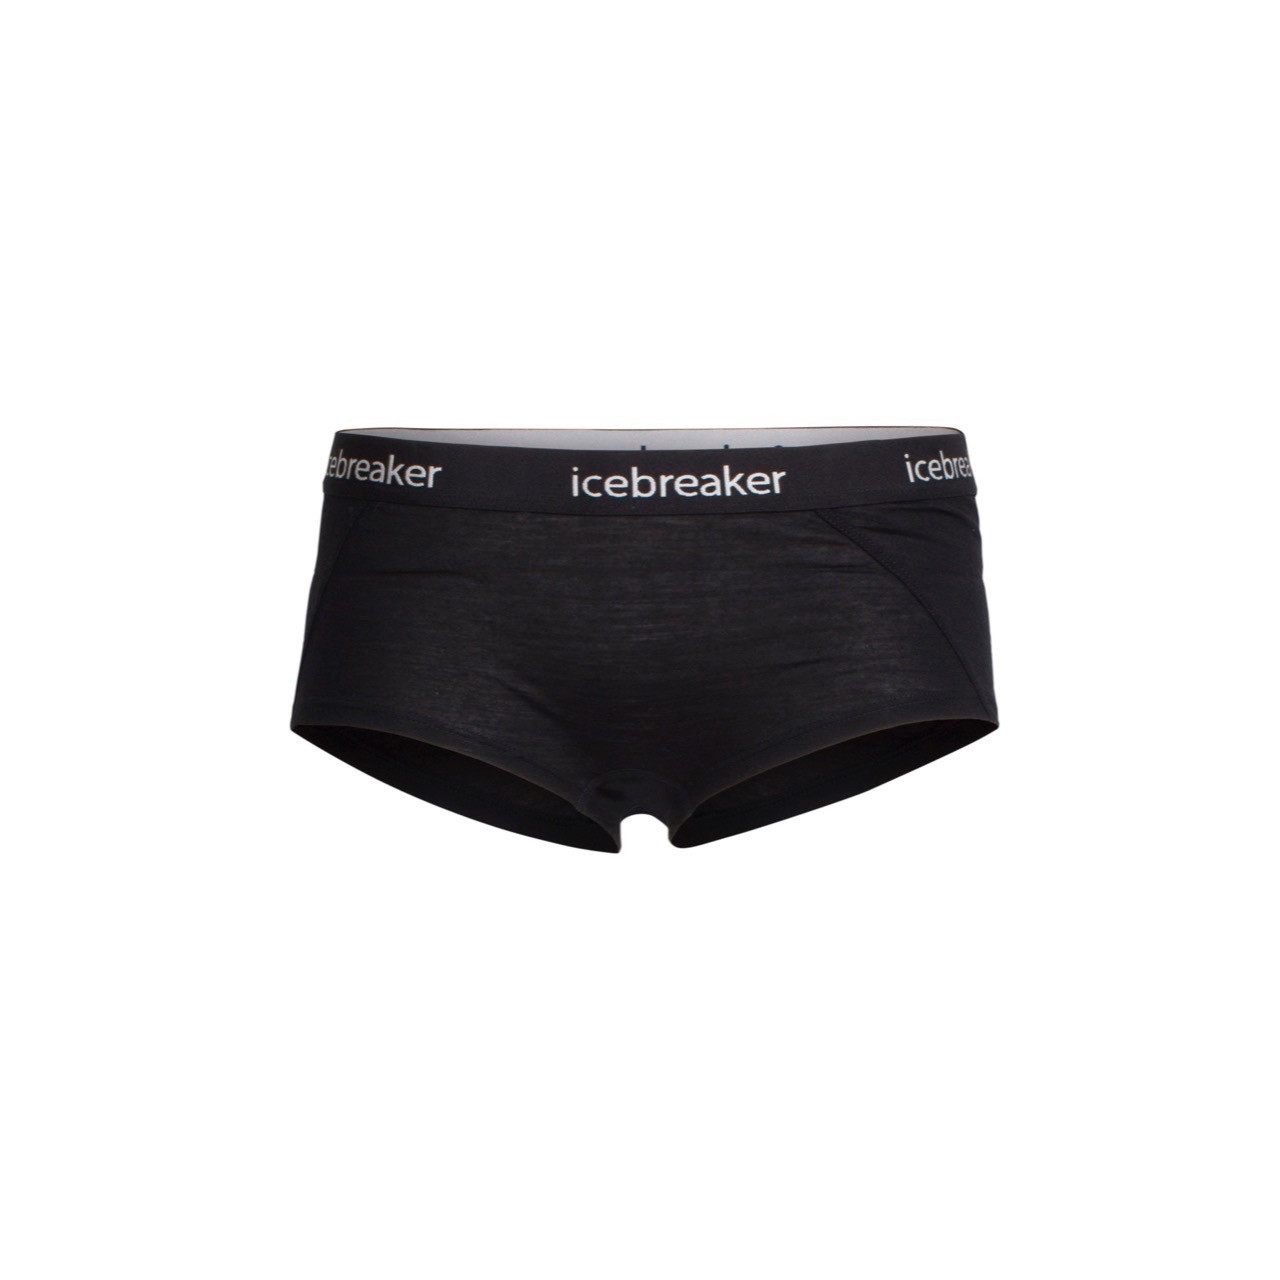 Icebreaker - Sprite Hot Pants Women gritstone heather at Sport Bittl Shop